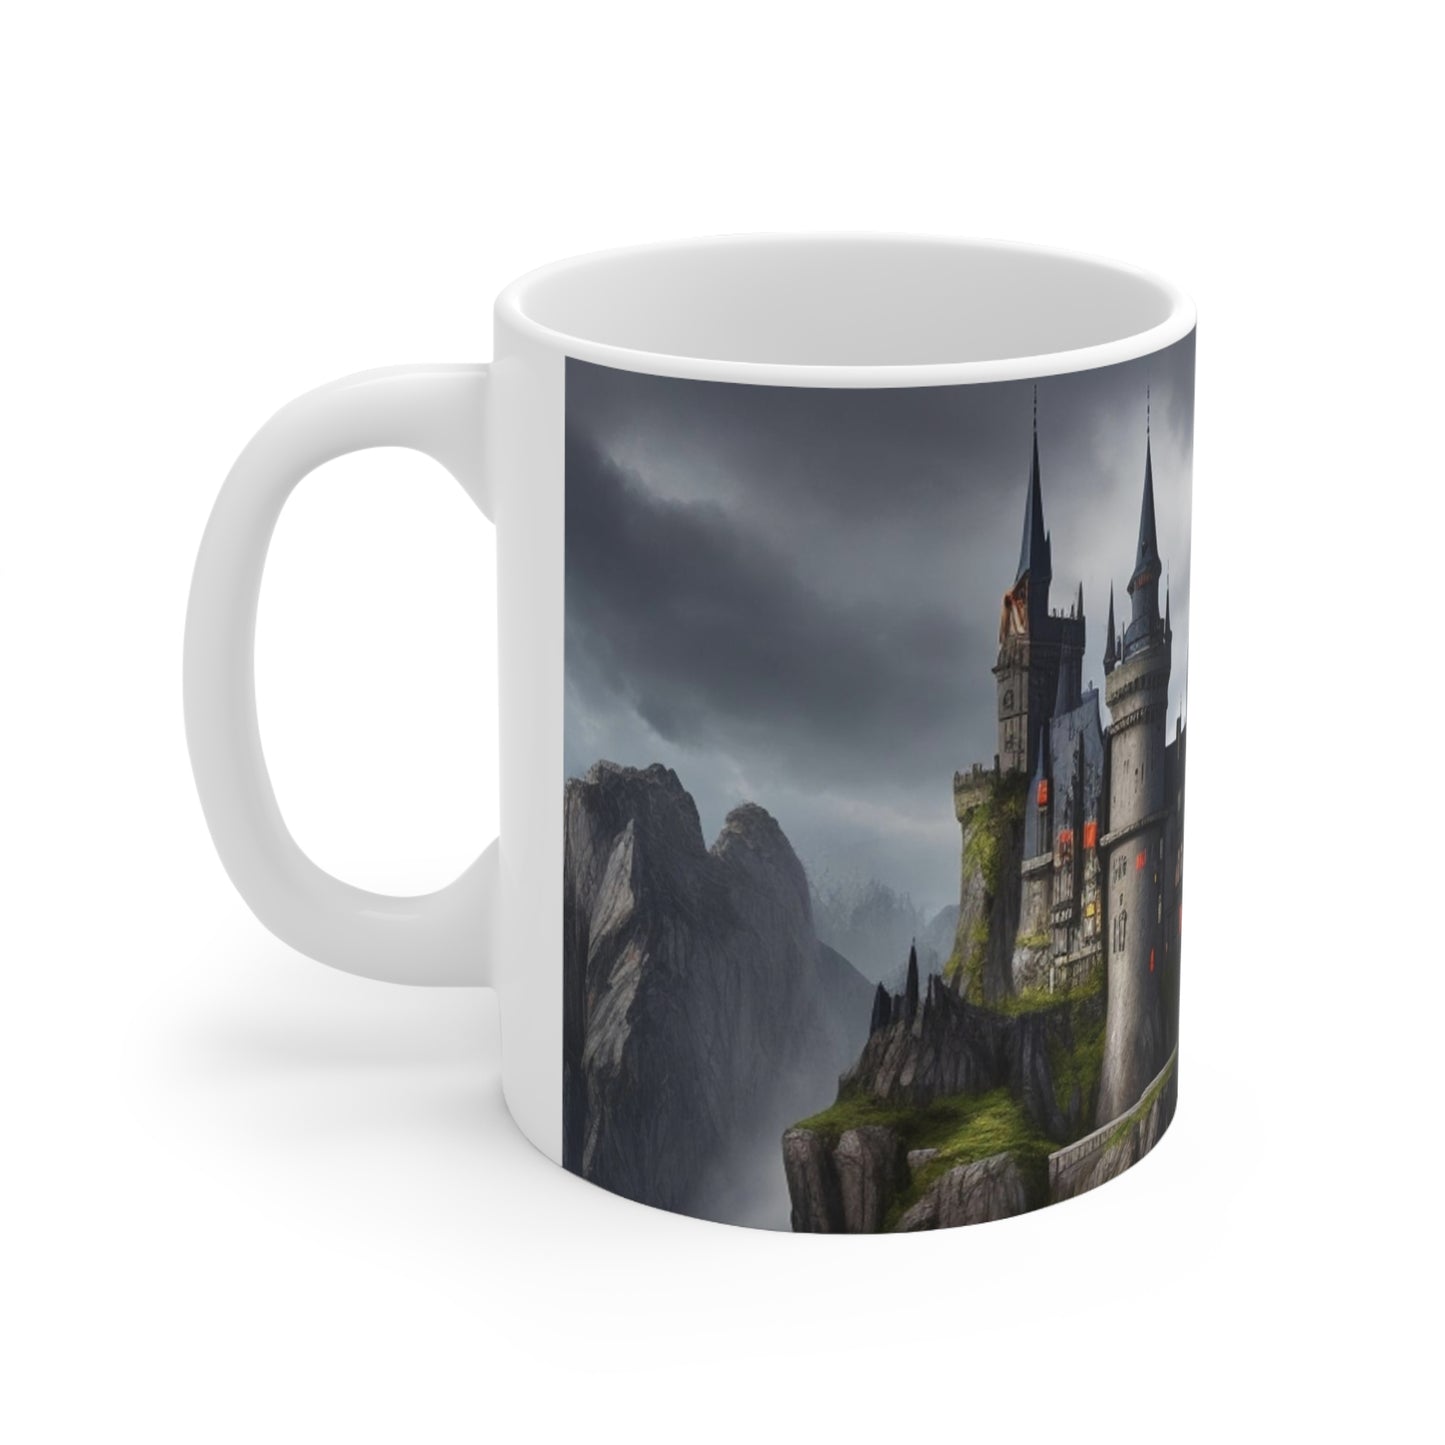 Scenic Castle Mug At Dusk Mug - Ceramic Coffee Mug 11oz